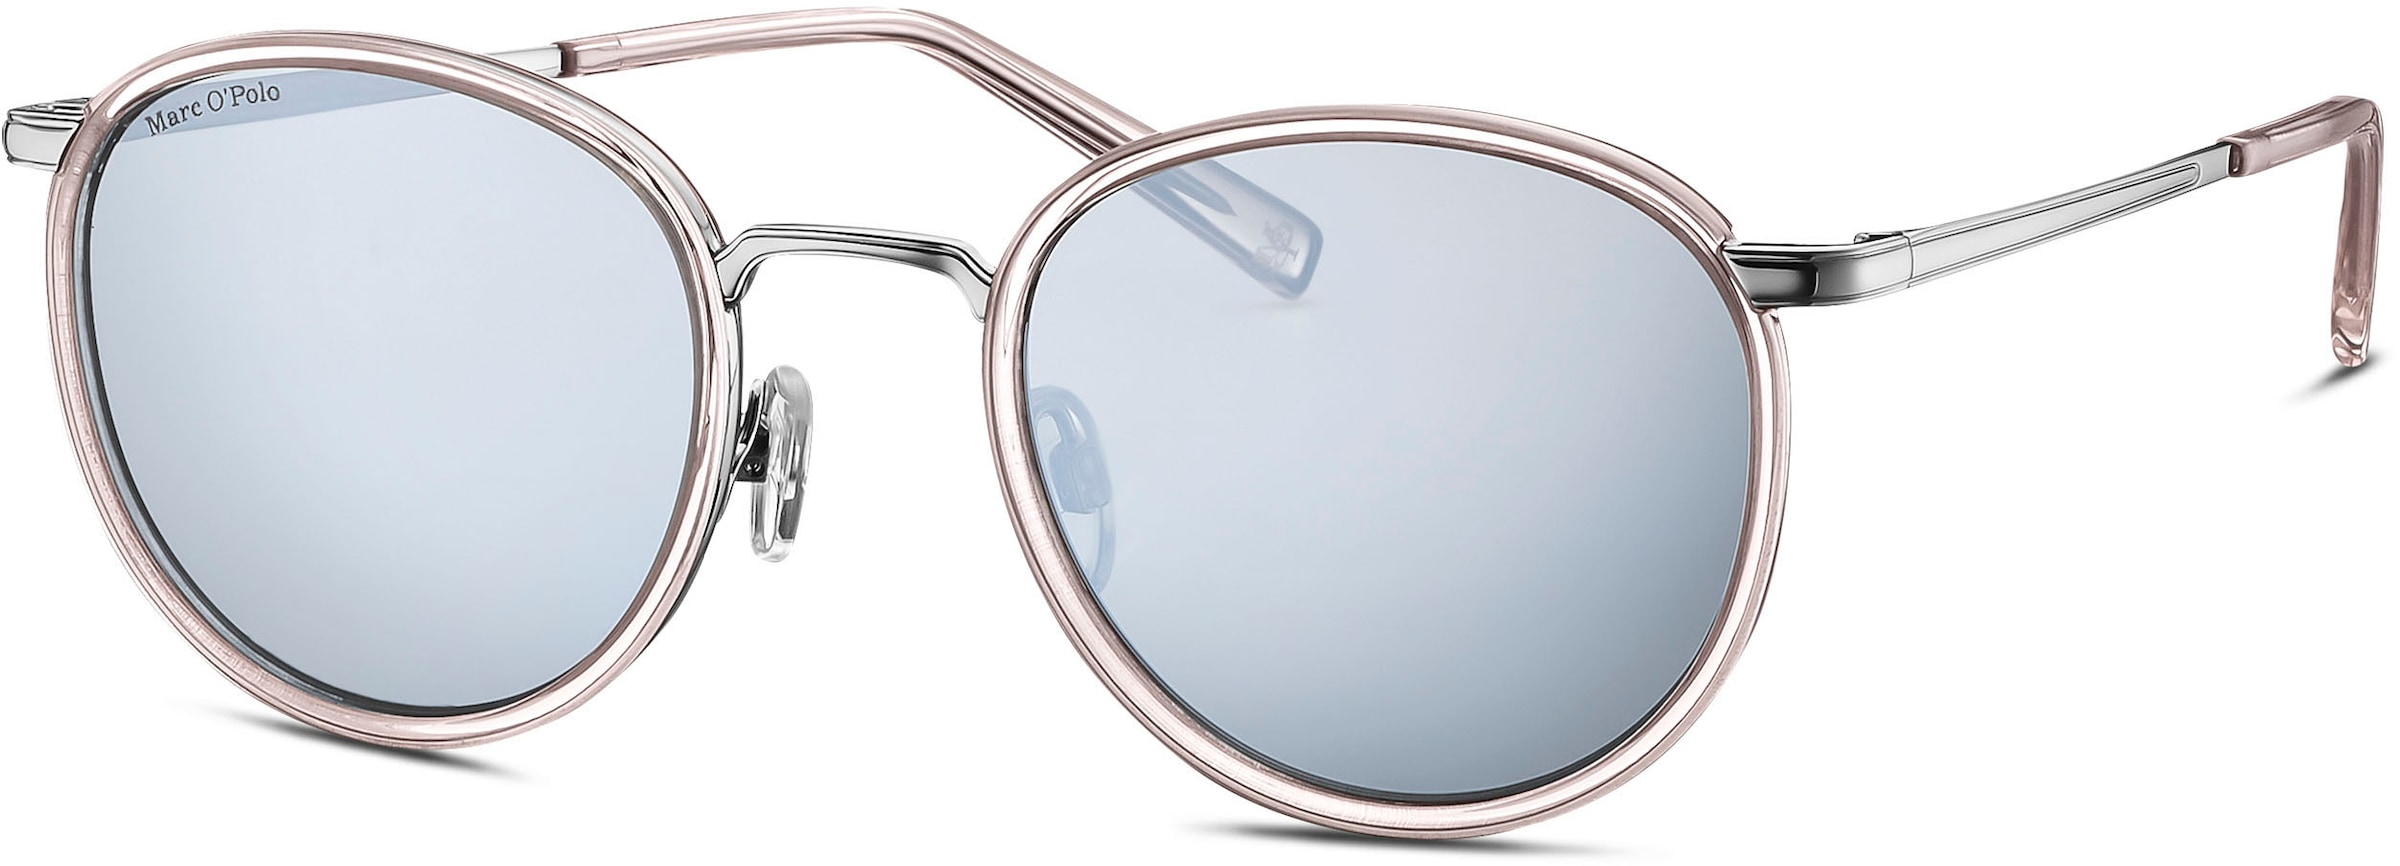 Marc O'Polo Sonnenbrille »Modell 505105«, Panto-Form bei